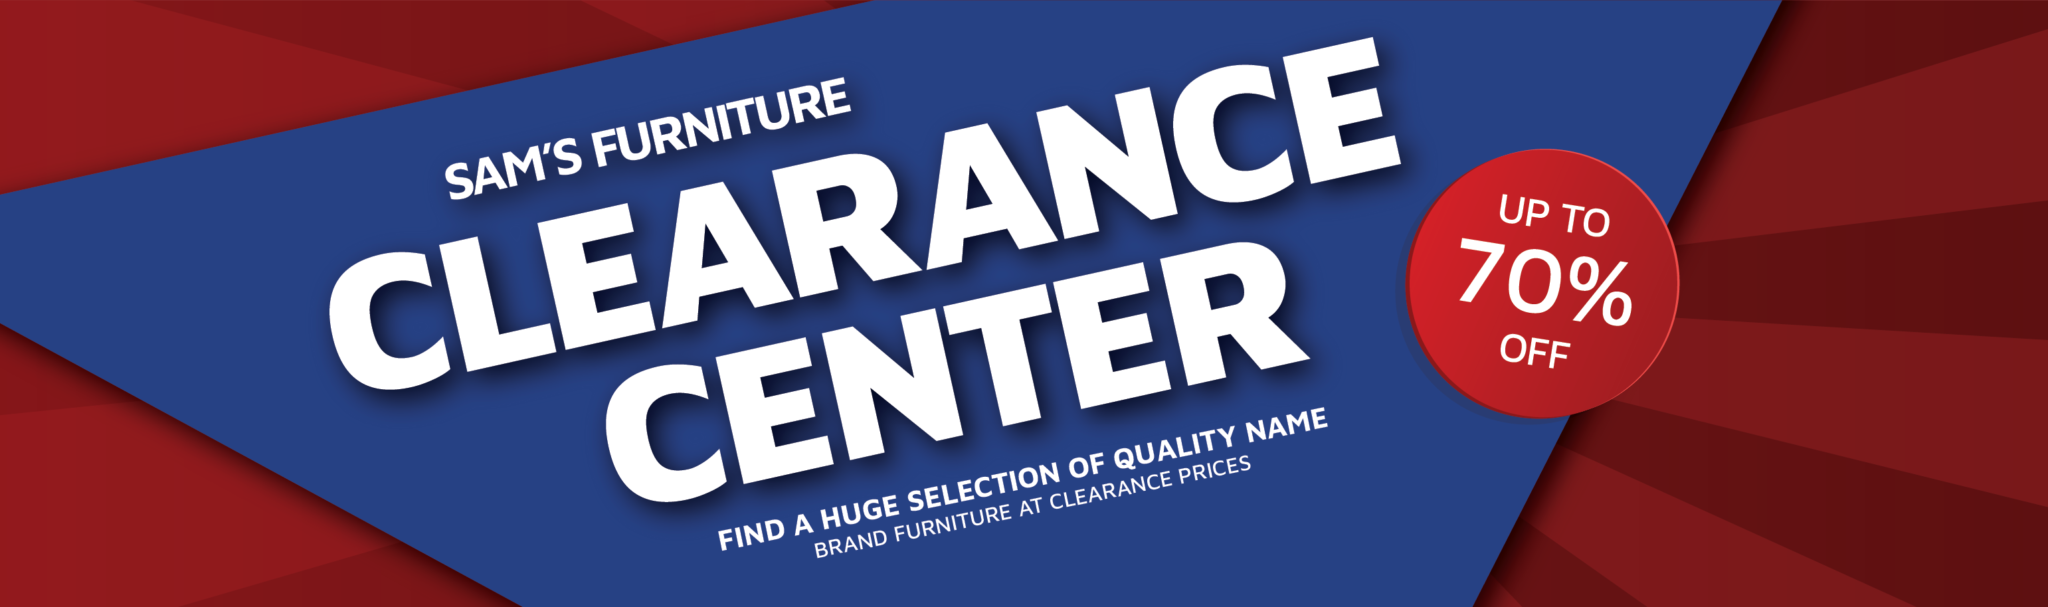 Clearance Center Sam S Furniture